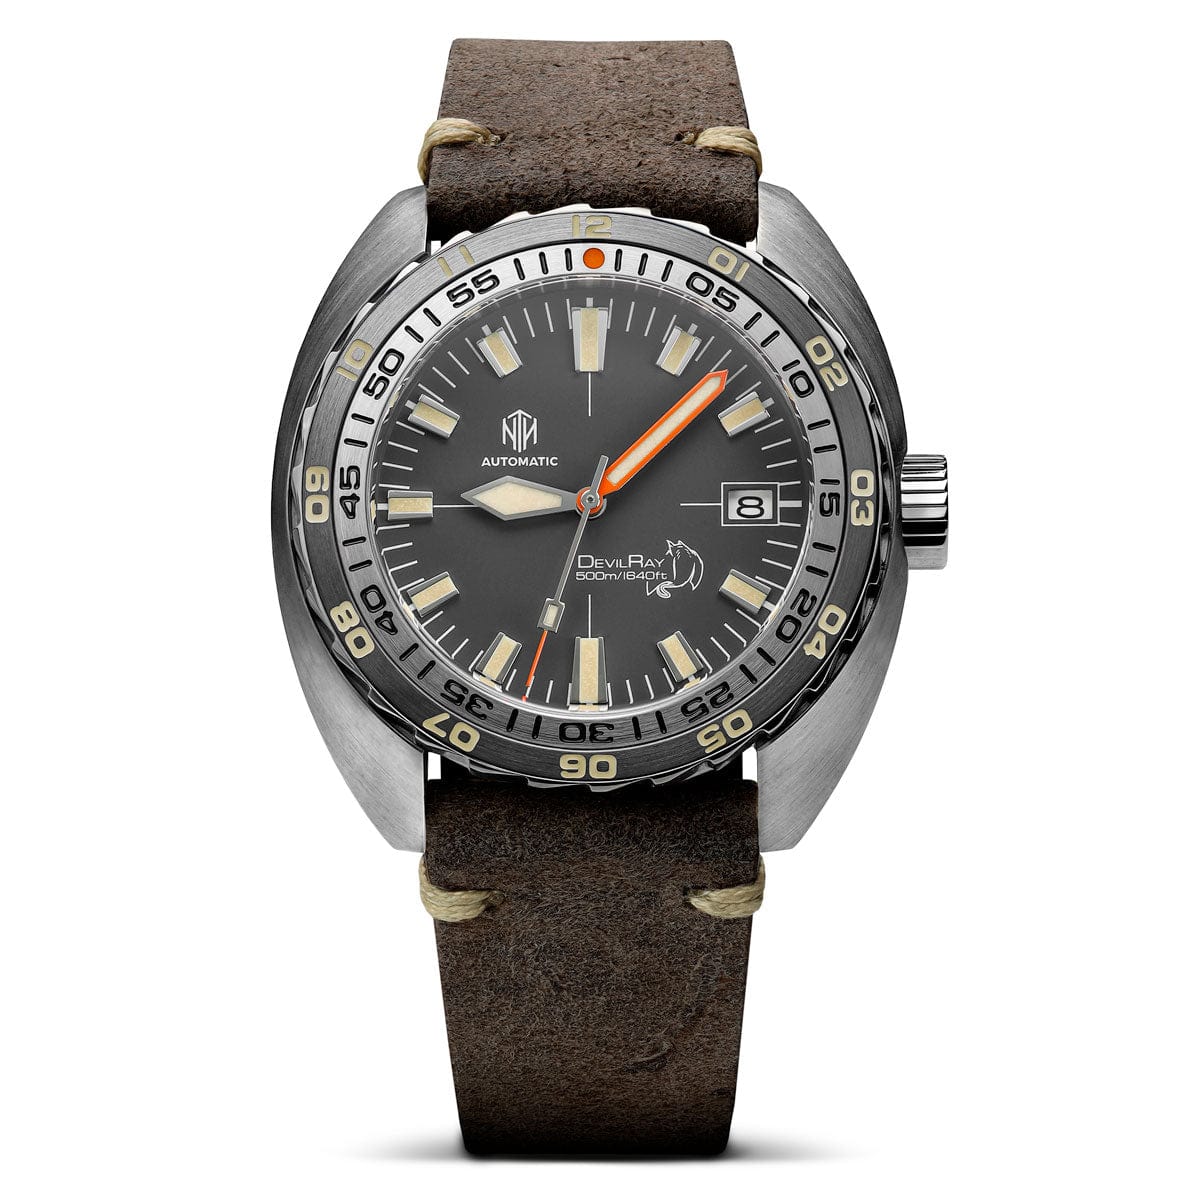 NTH DevilRay Dive Watch - Vintage Grey - Leather Strap - WatchGecko Exclusive